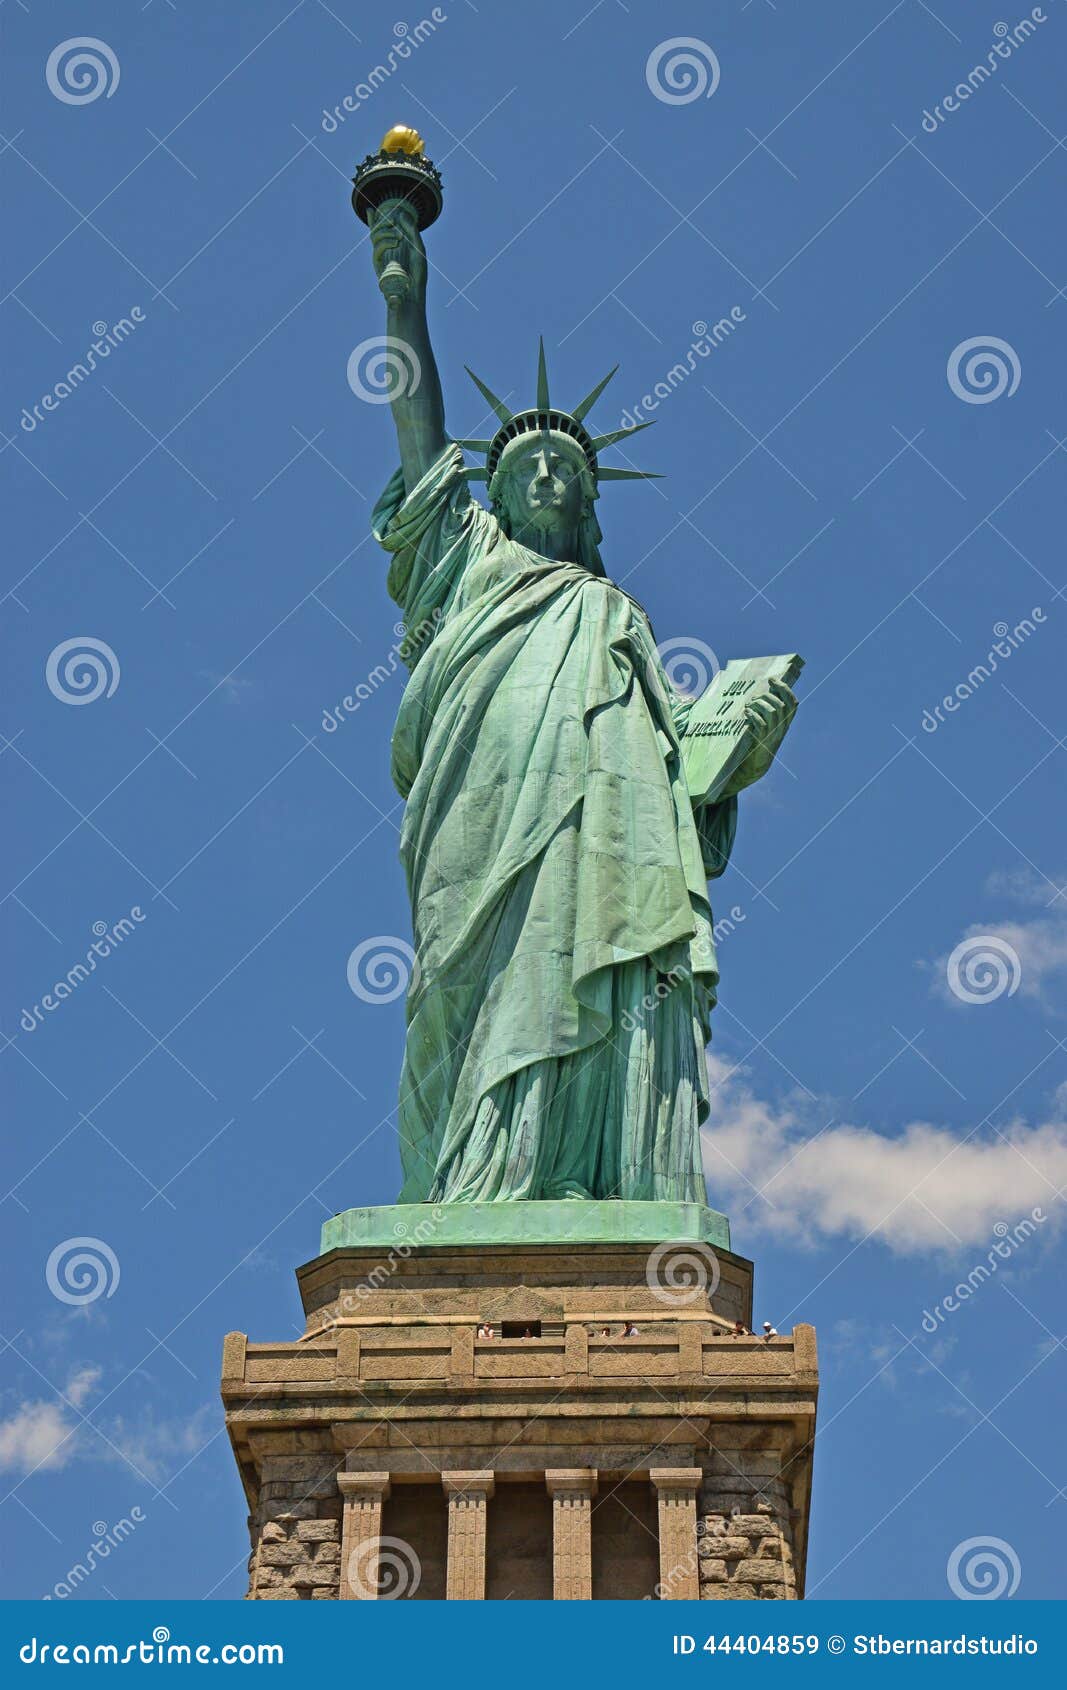 statue of liberty on liberty island